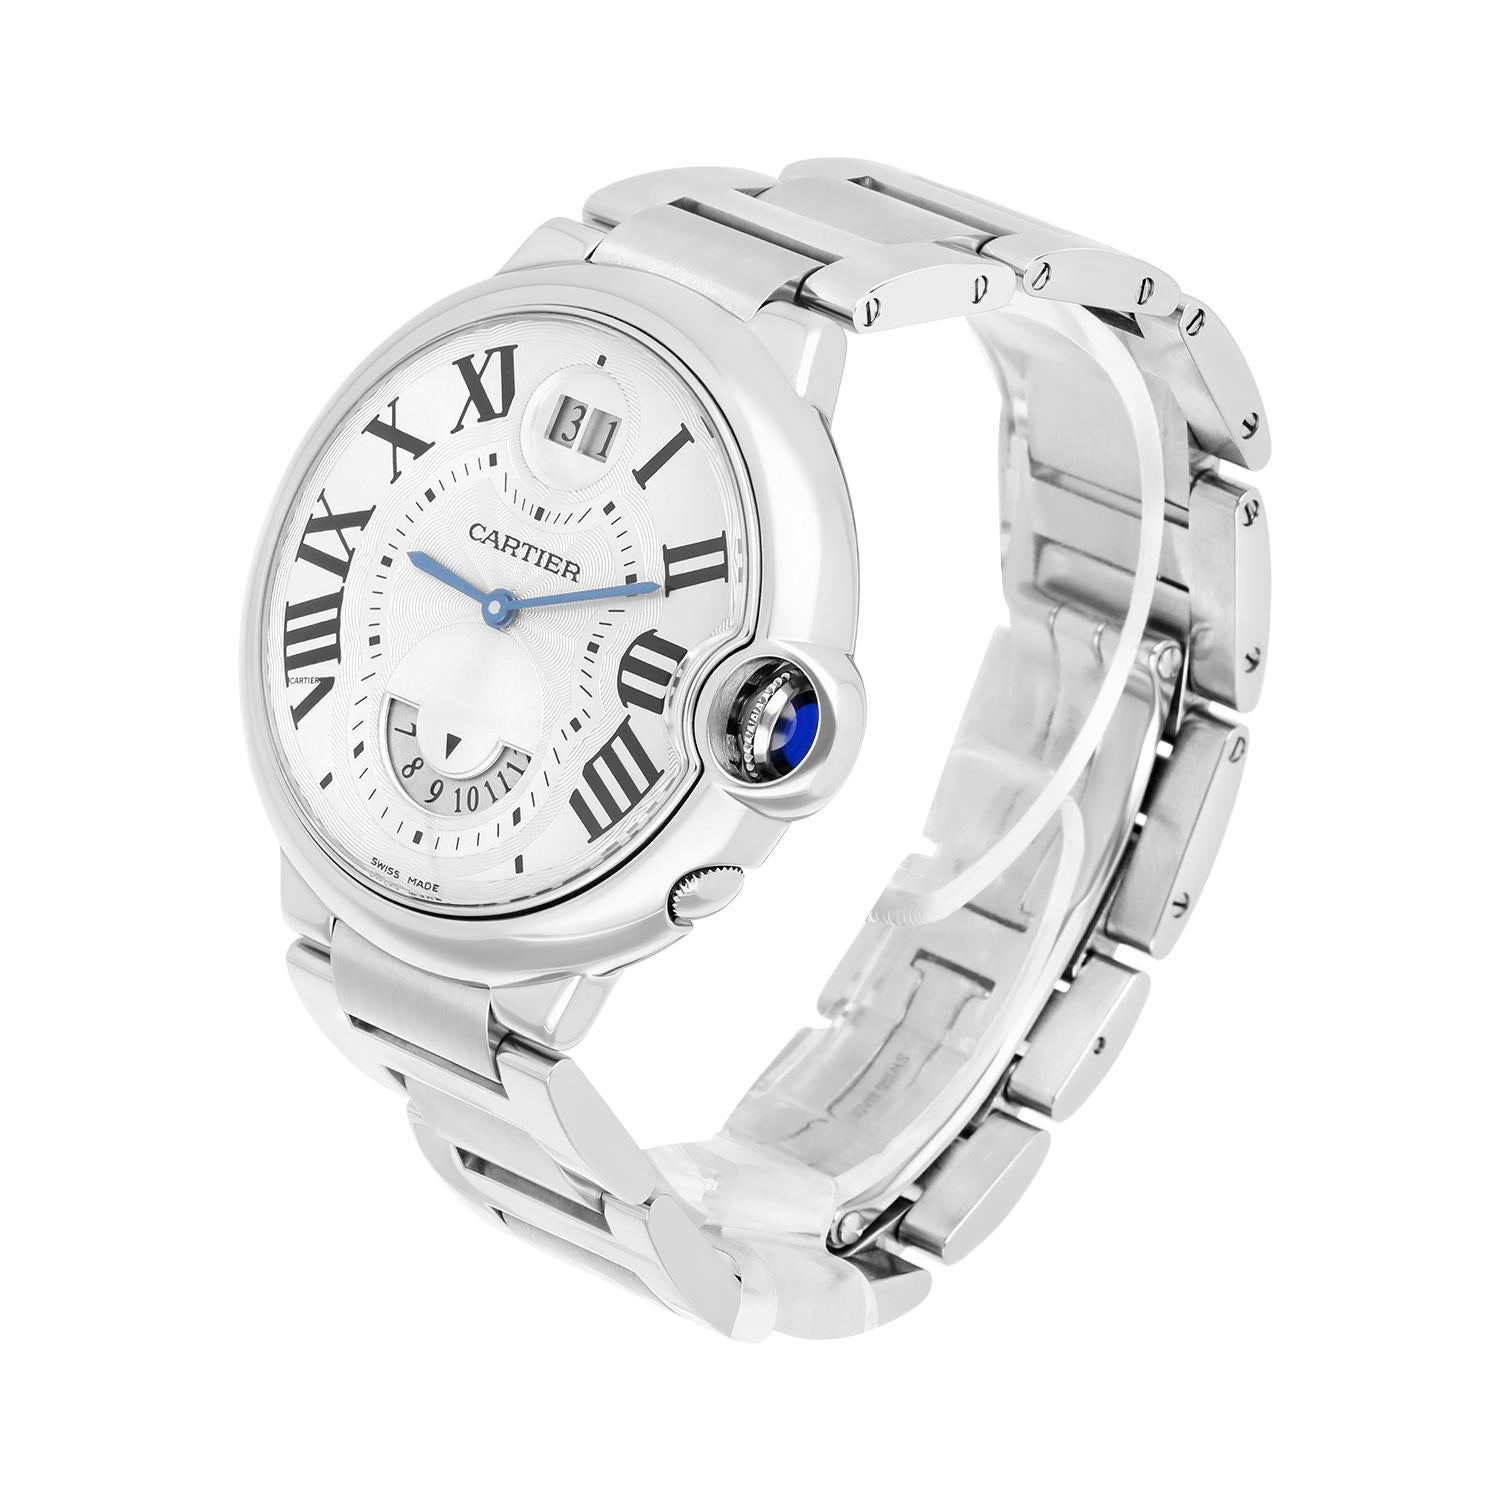 Modern Cartier Ballon Bleu Stainless Steel Two Timezone Quartz Watch 38MM W6920011 For Sale